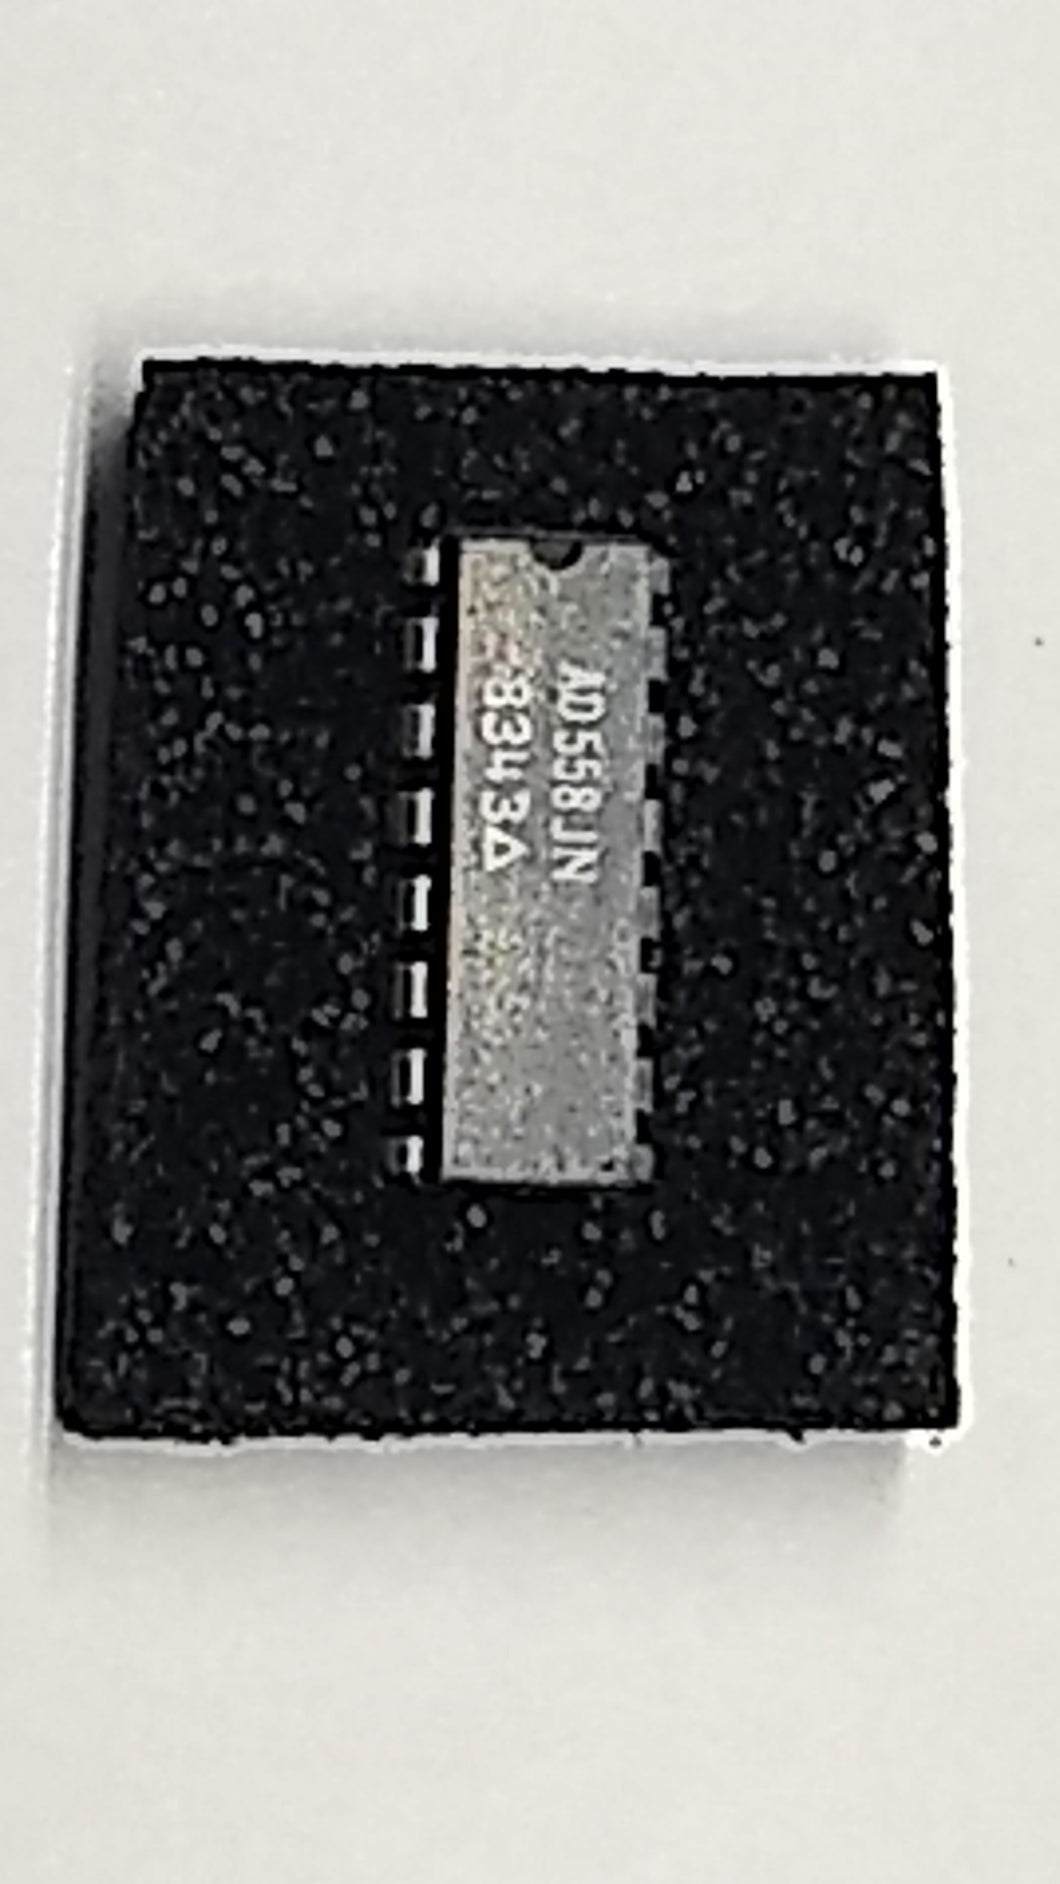 AD558 8 bit ADC chip